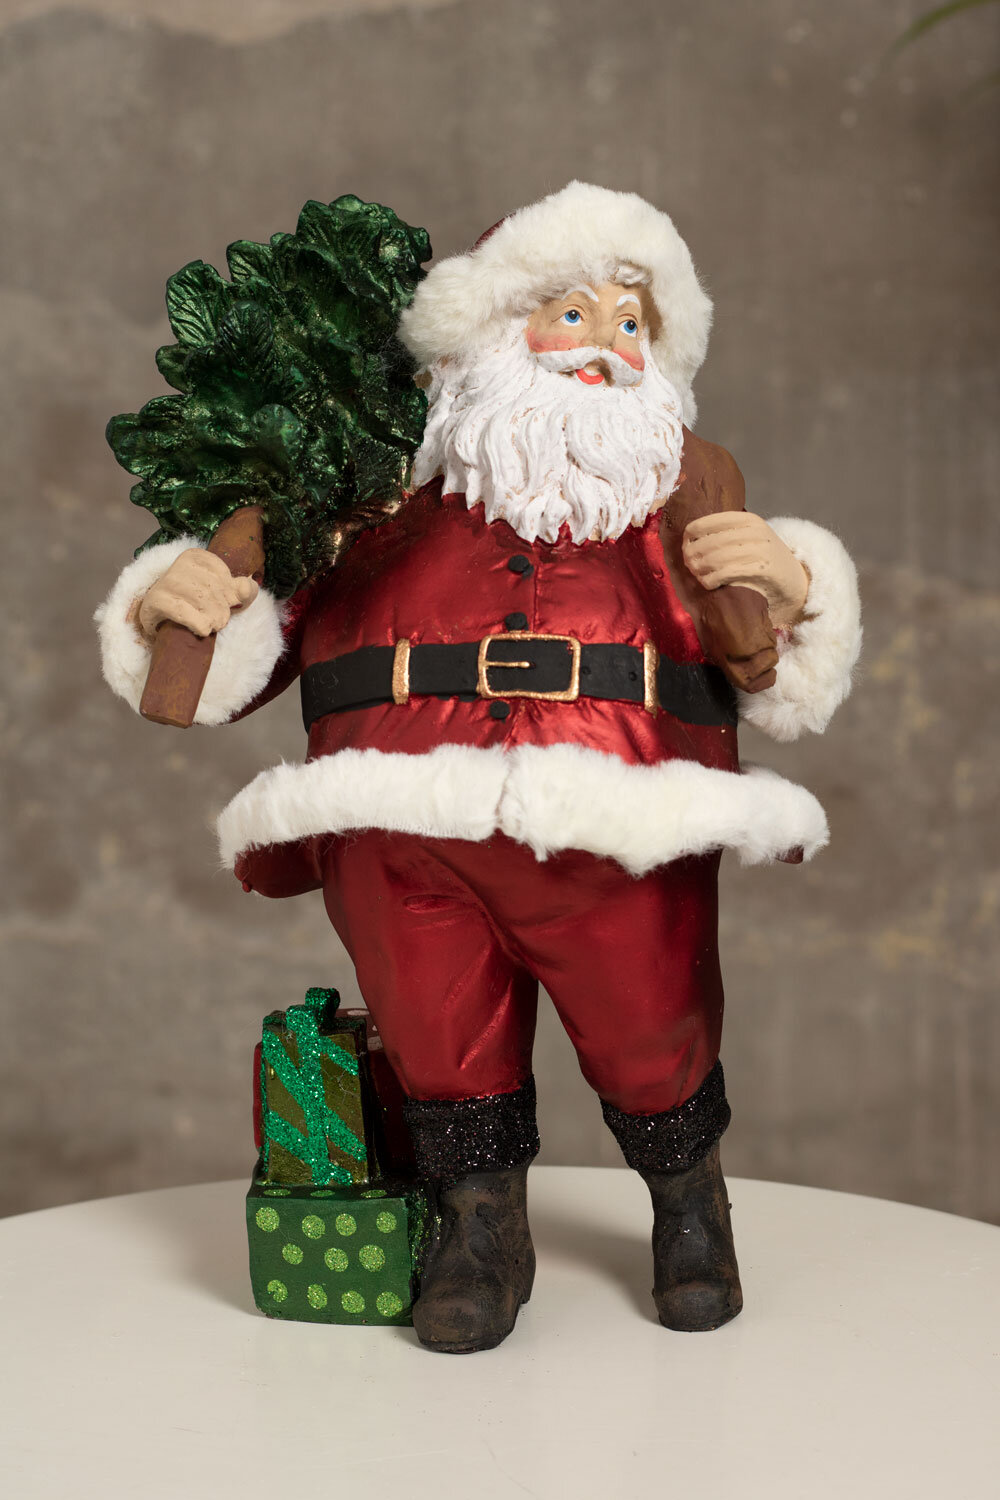 Big Santa Claus with fir tree